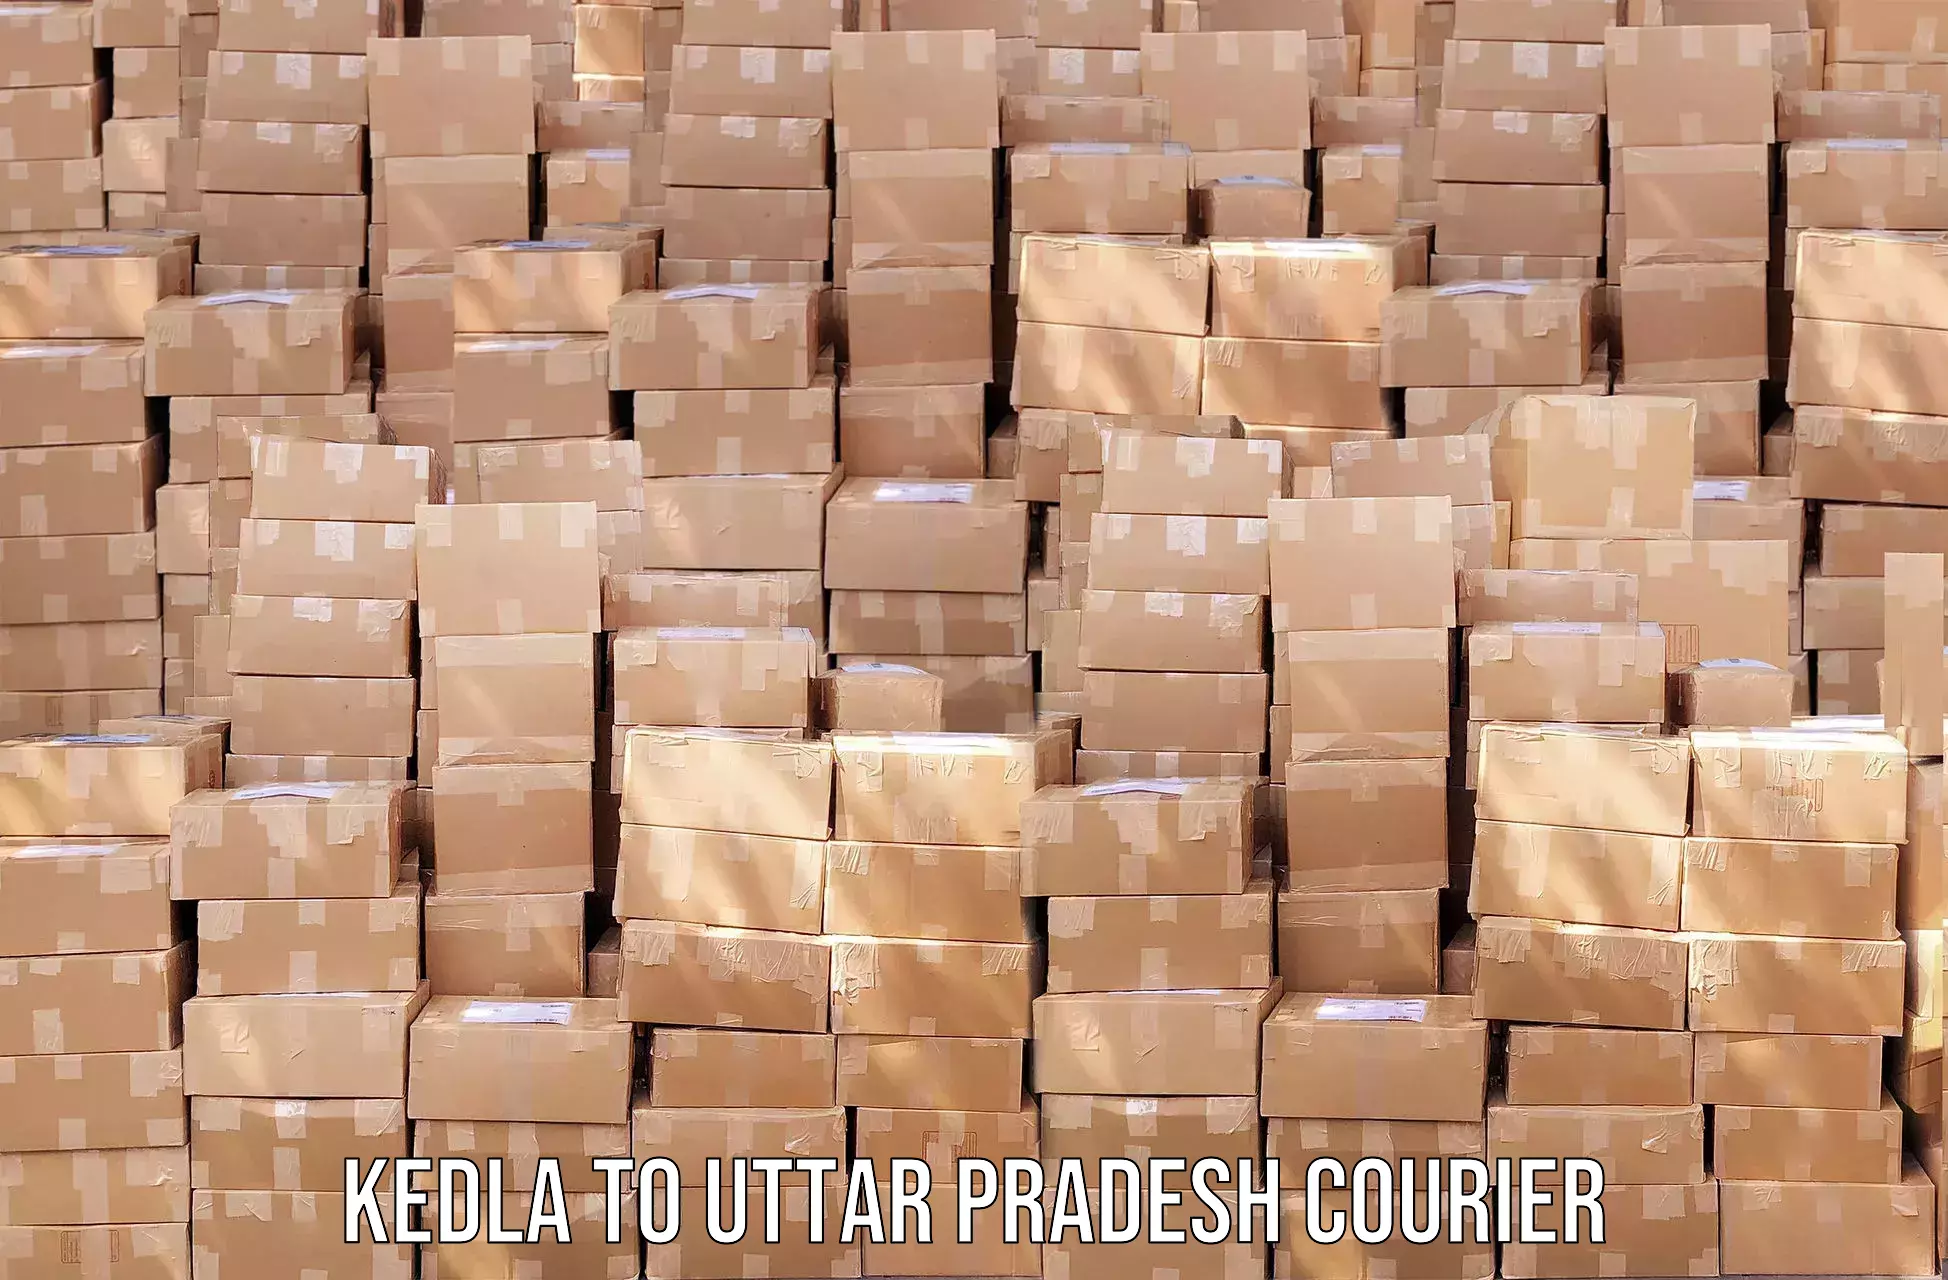 Advanced shipping services Kedla to Bhadohi